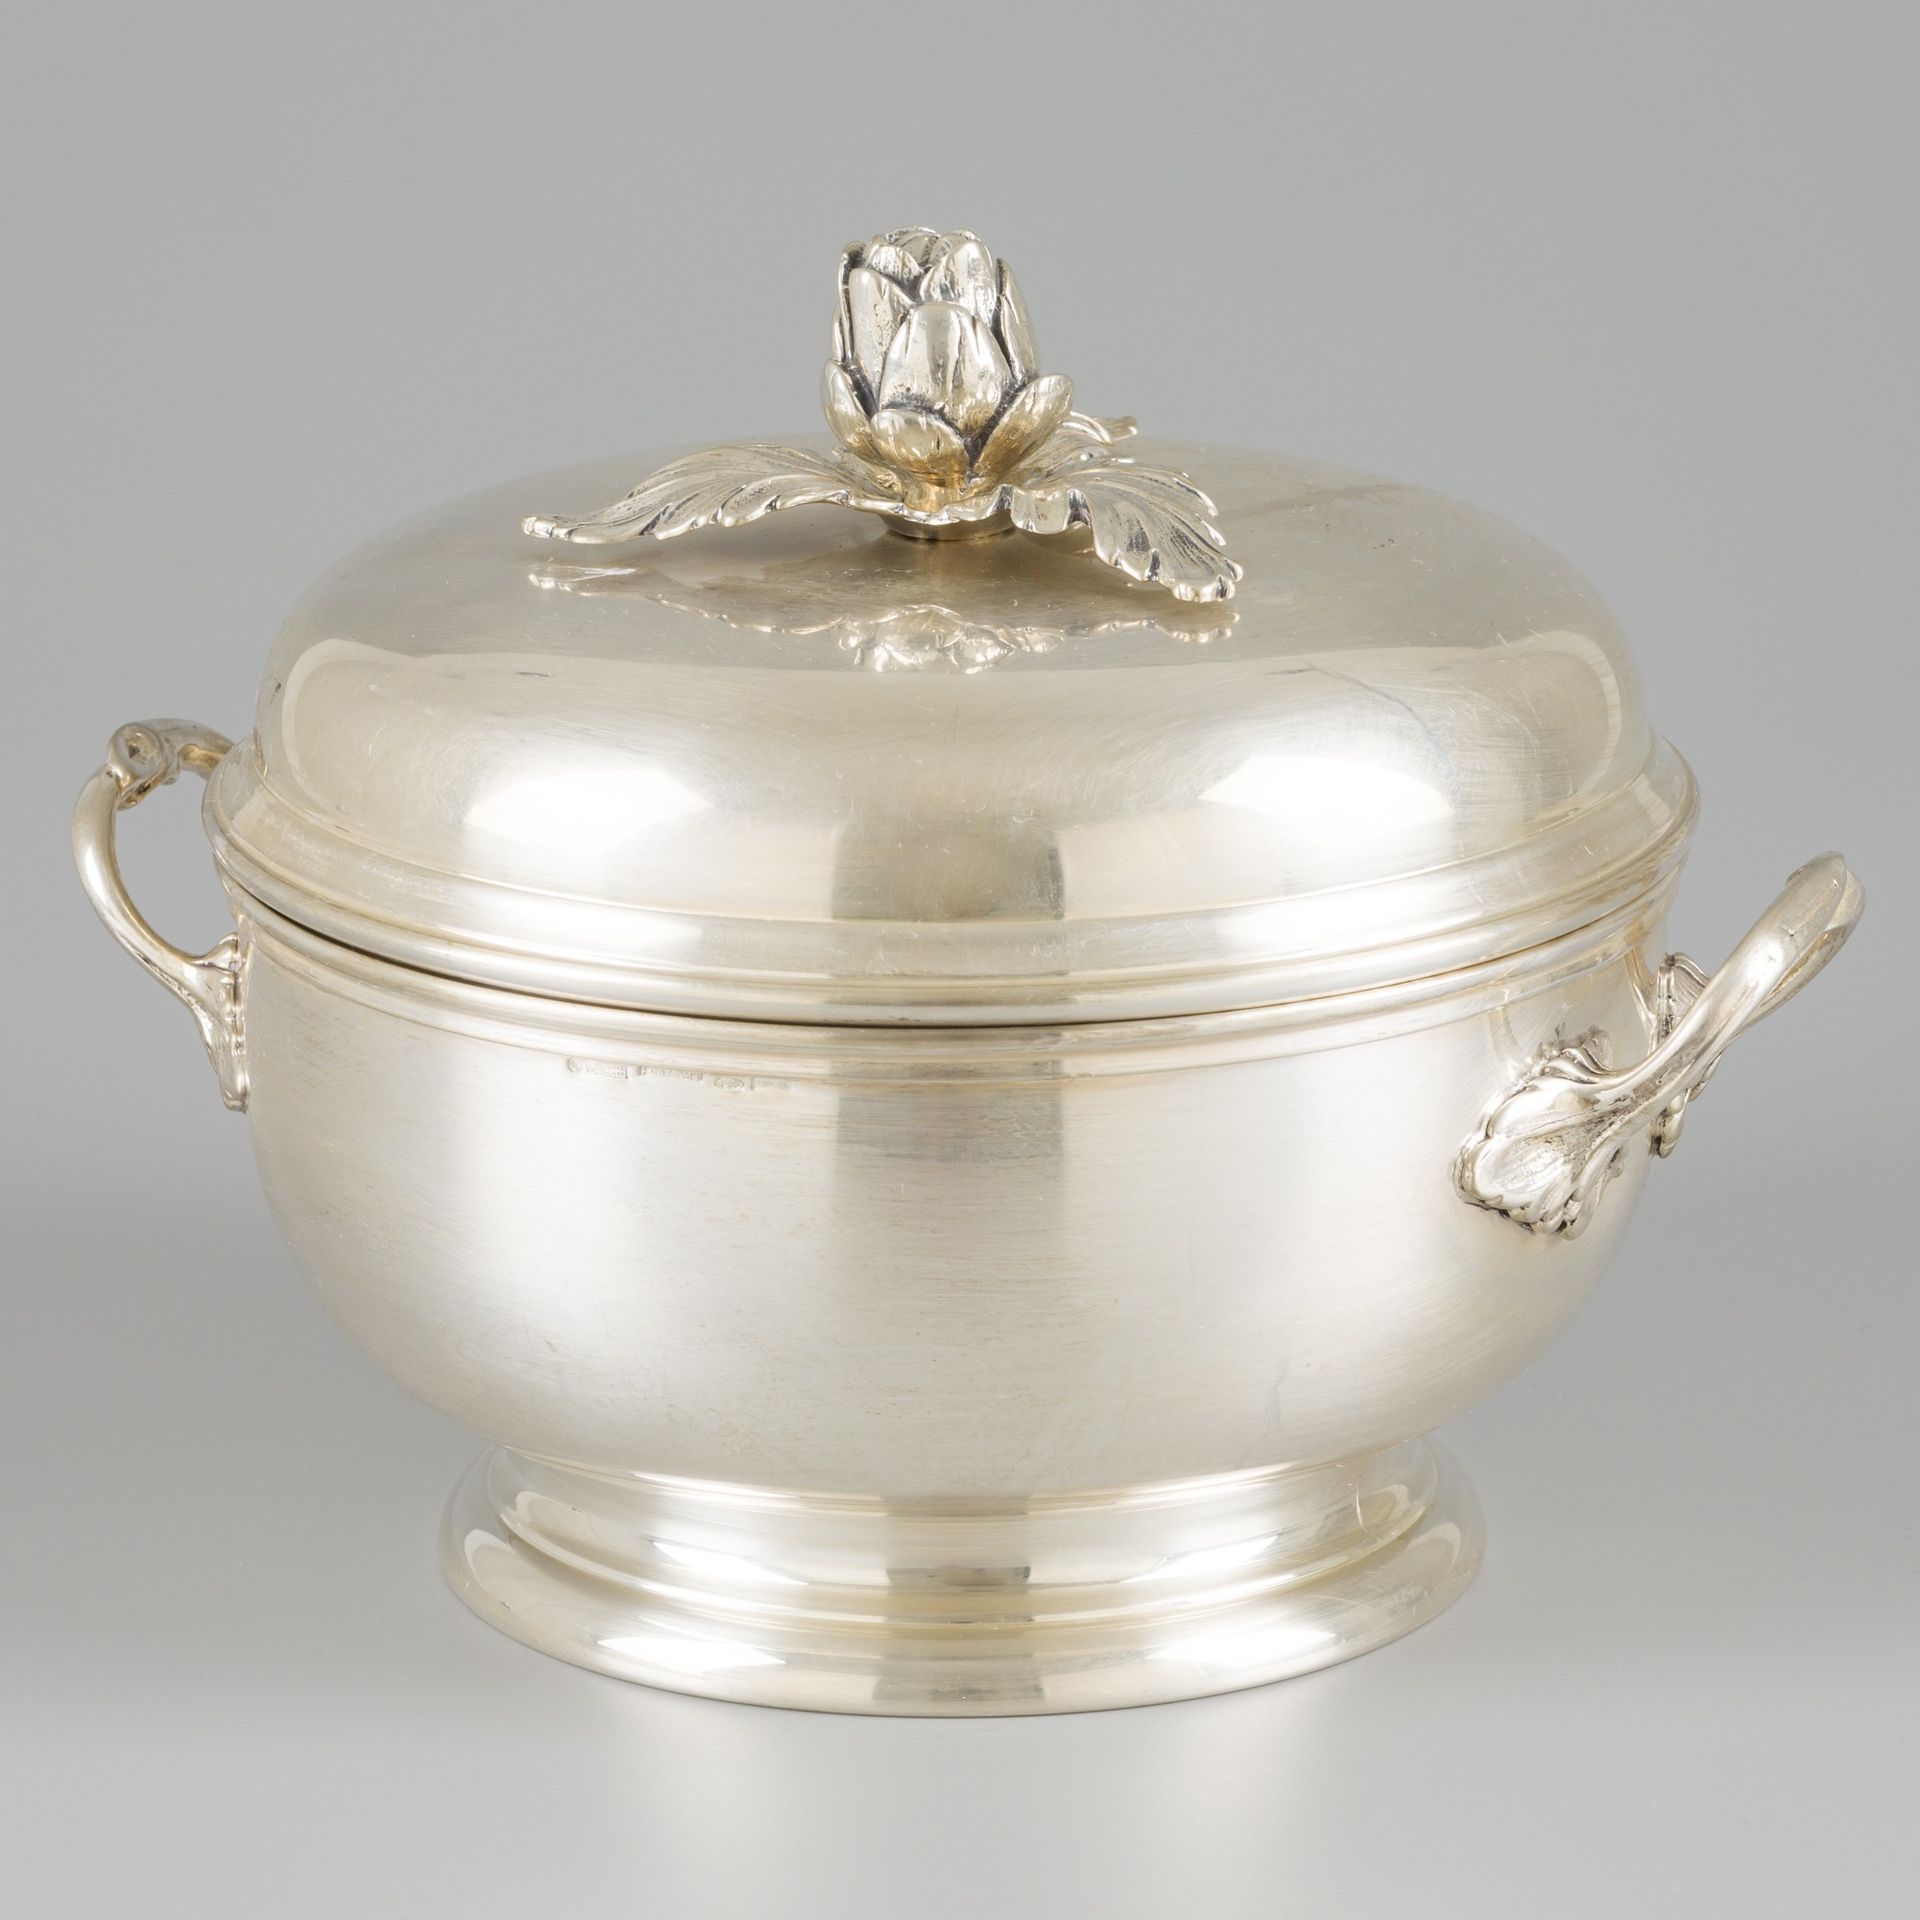 Serving bowl / tureen silver. Großes, rundes, handgefertigtes Modell mit abnehmb&hellip;